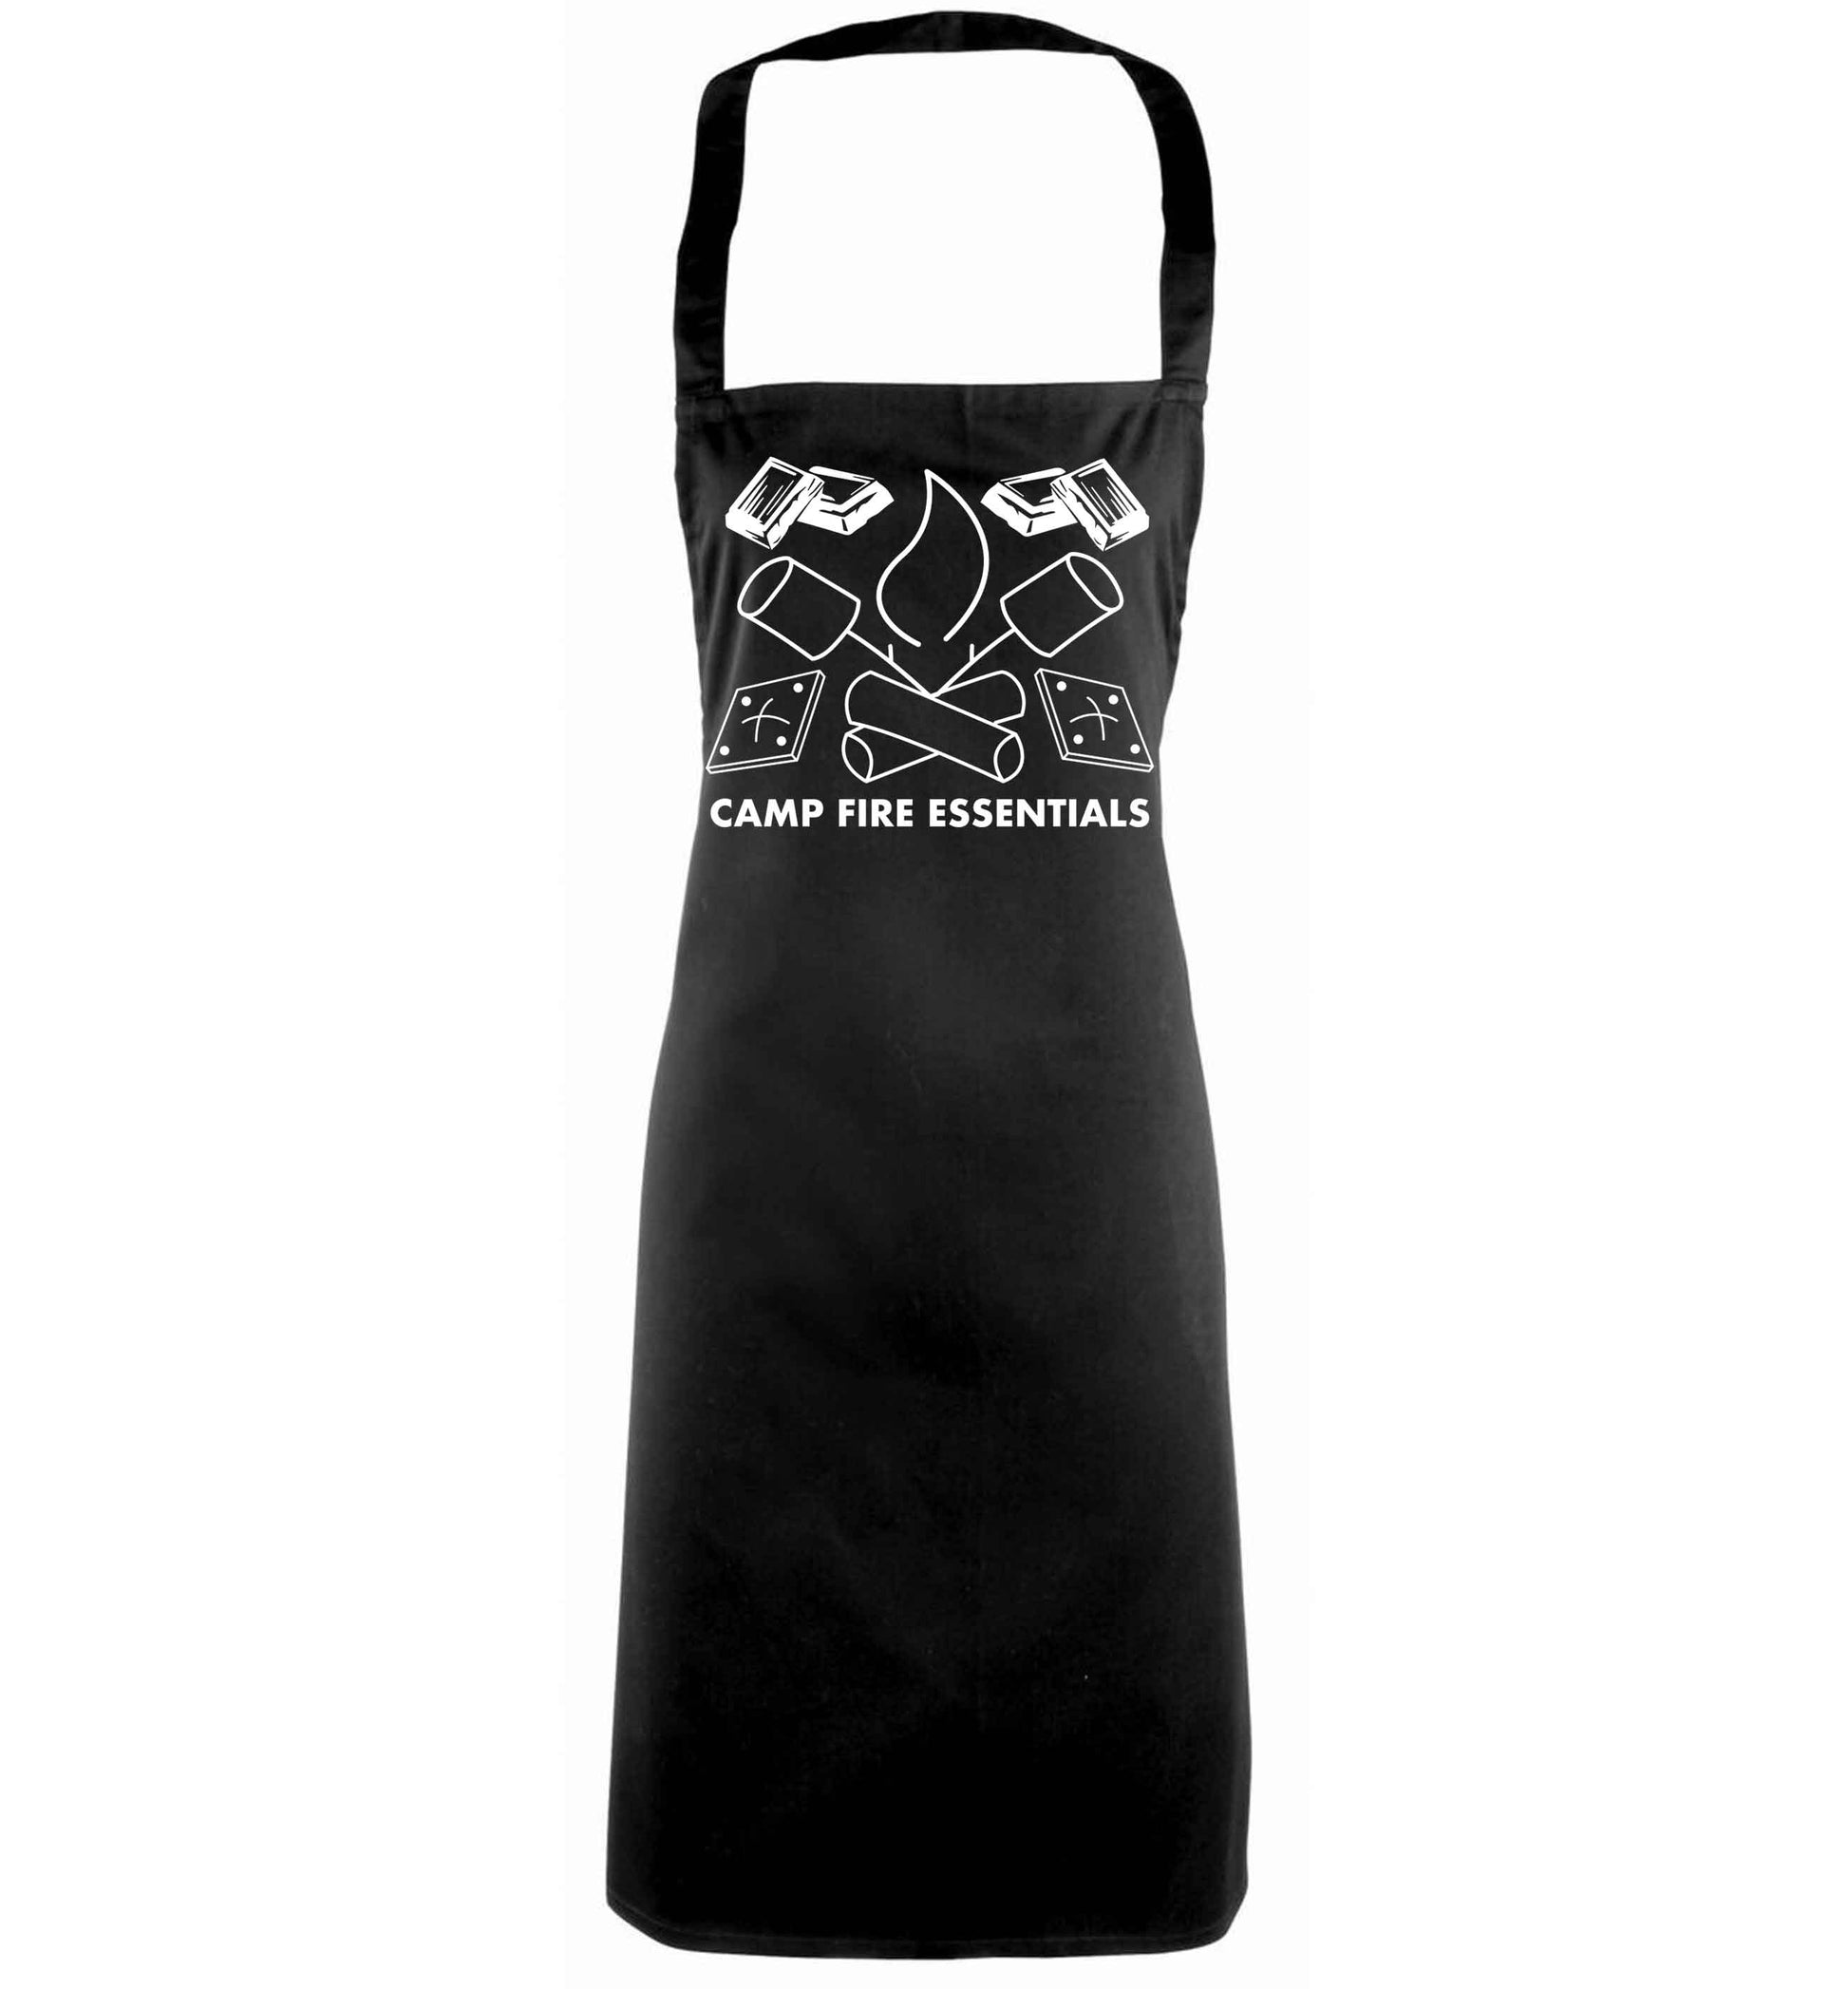 Campfire essentials black apron